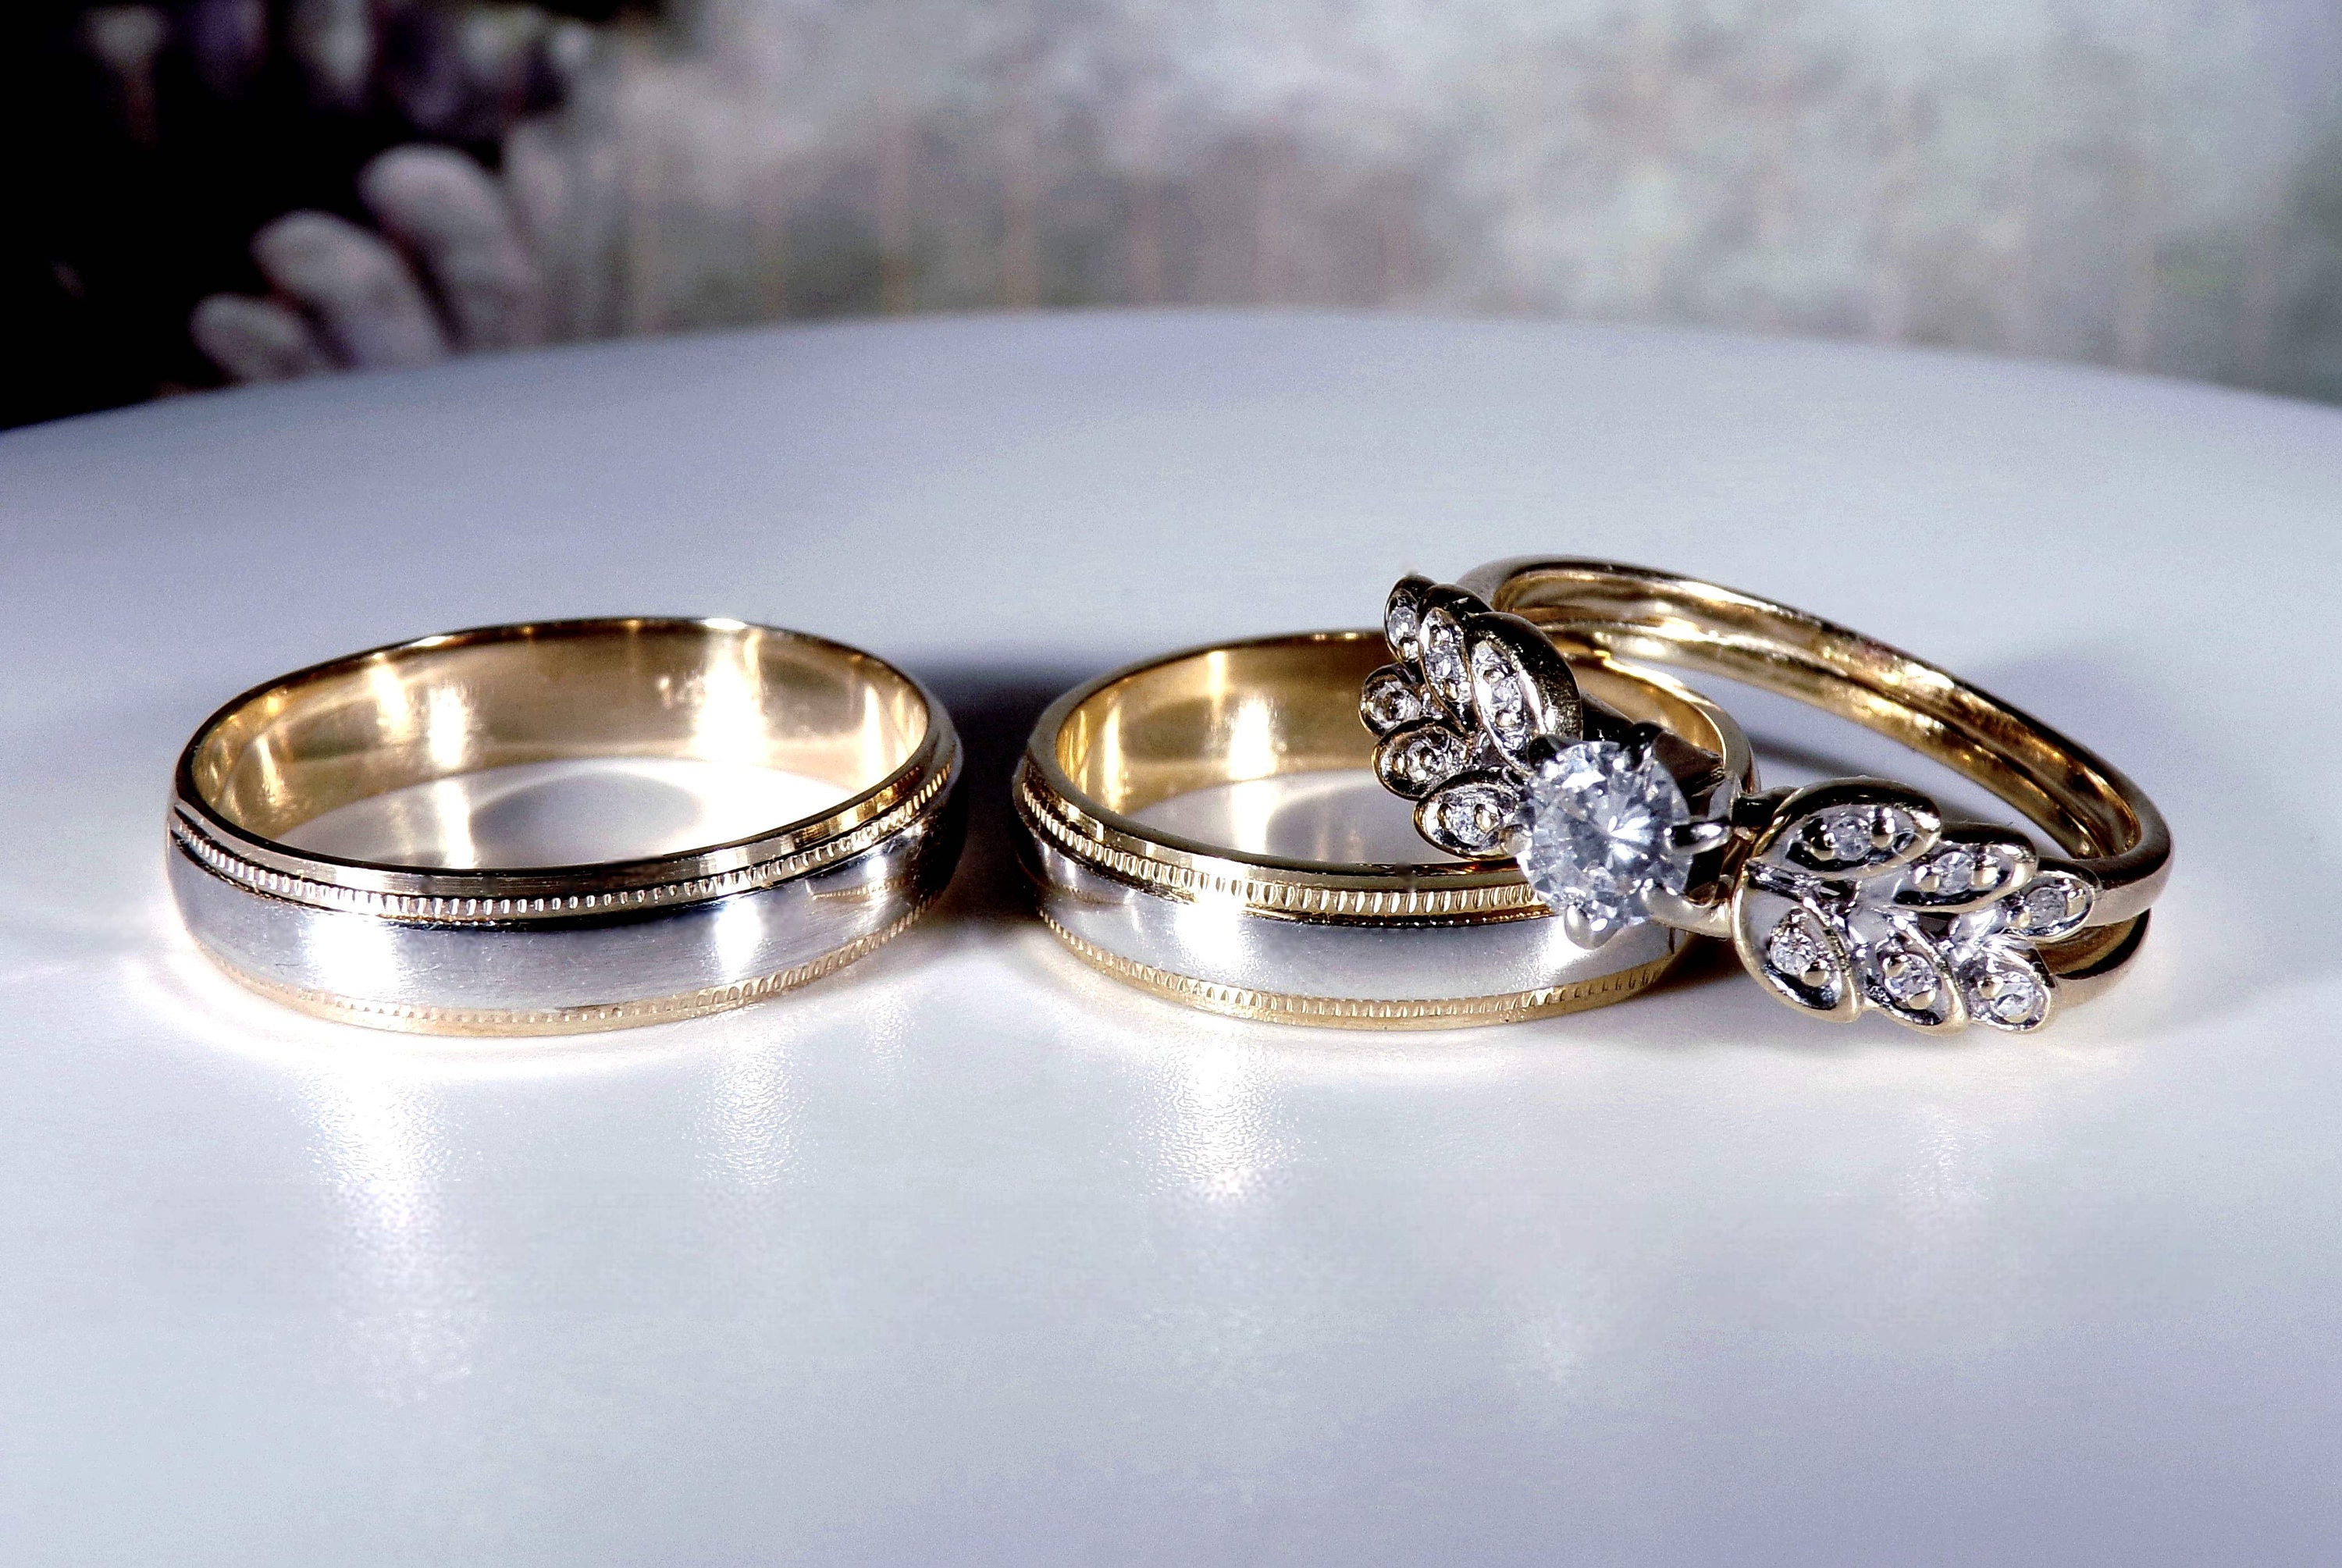 22 Carat Gold Bridal Ring - £500.00.00 (SKU:33385)